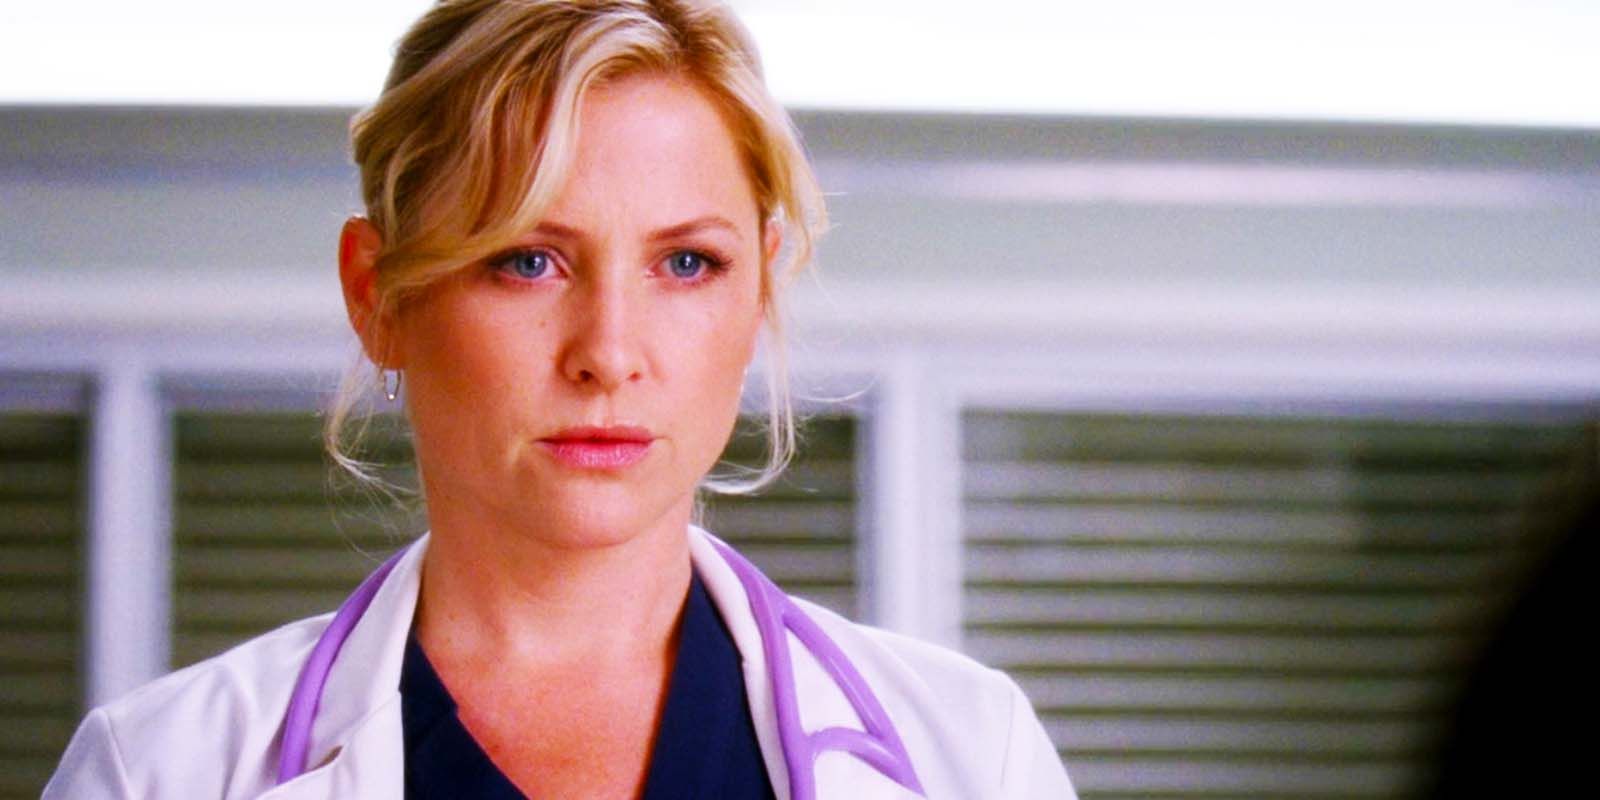 Jessica Capshaw as Arizona Robbins in Grey's Anatomy season 5 episode 11